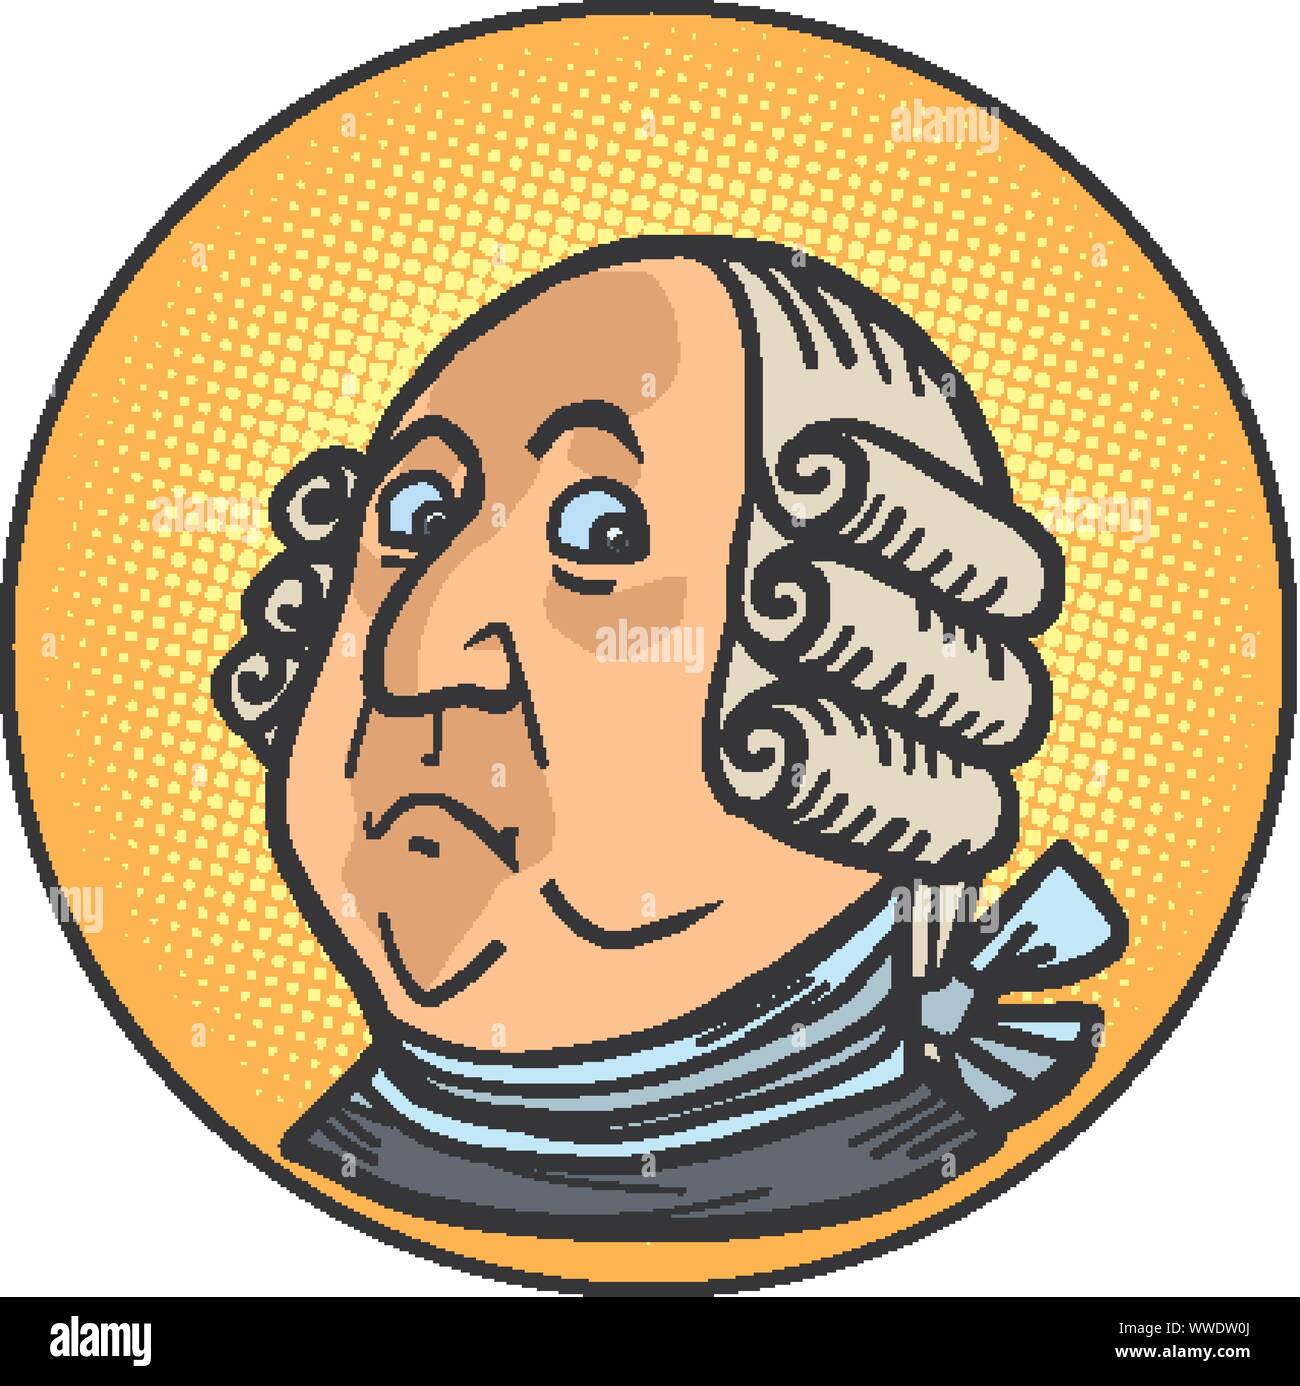 Präsident Benjamin Franklin, historische Figur, Portrait. Comic cartoon Pop Art retro Vektor illustration Zeichnung Stock Vektor